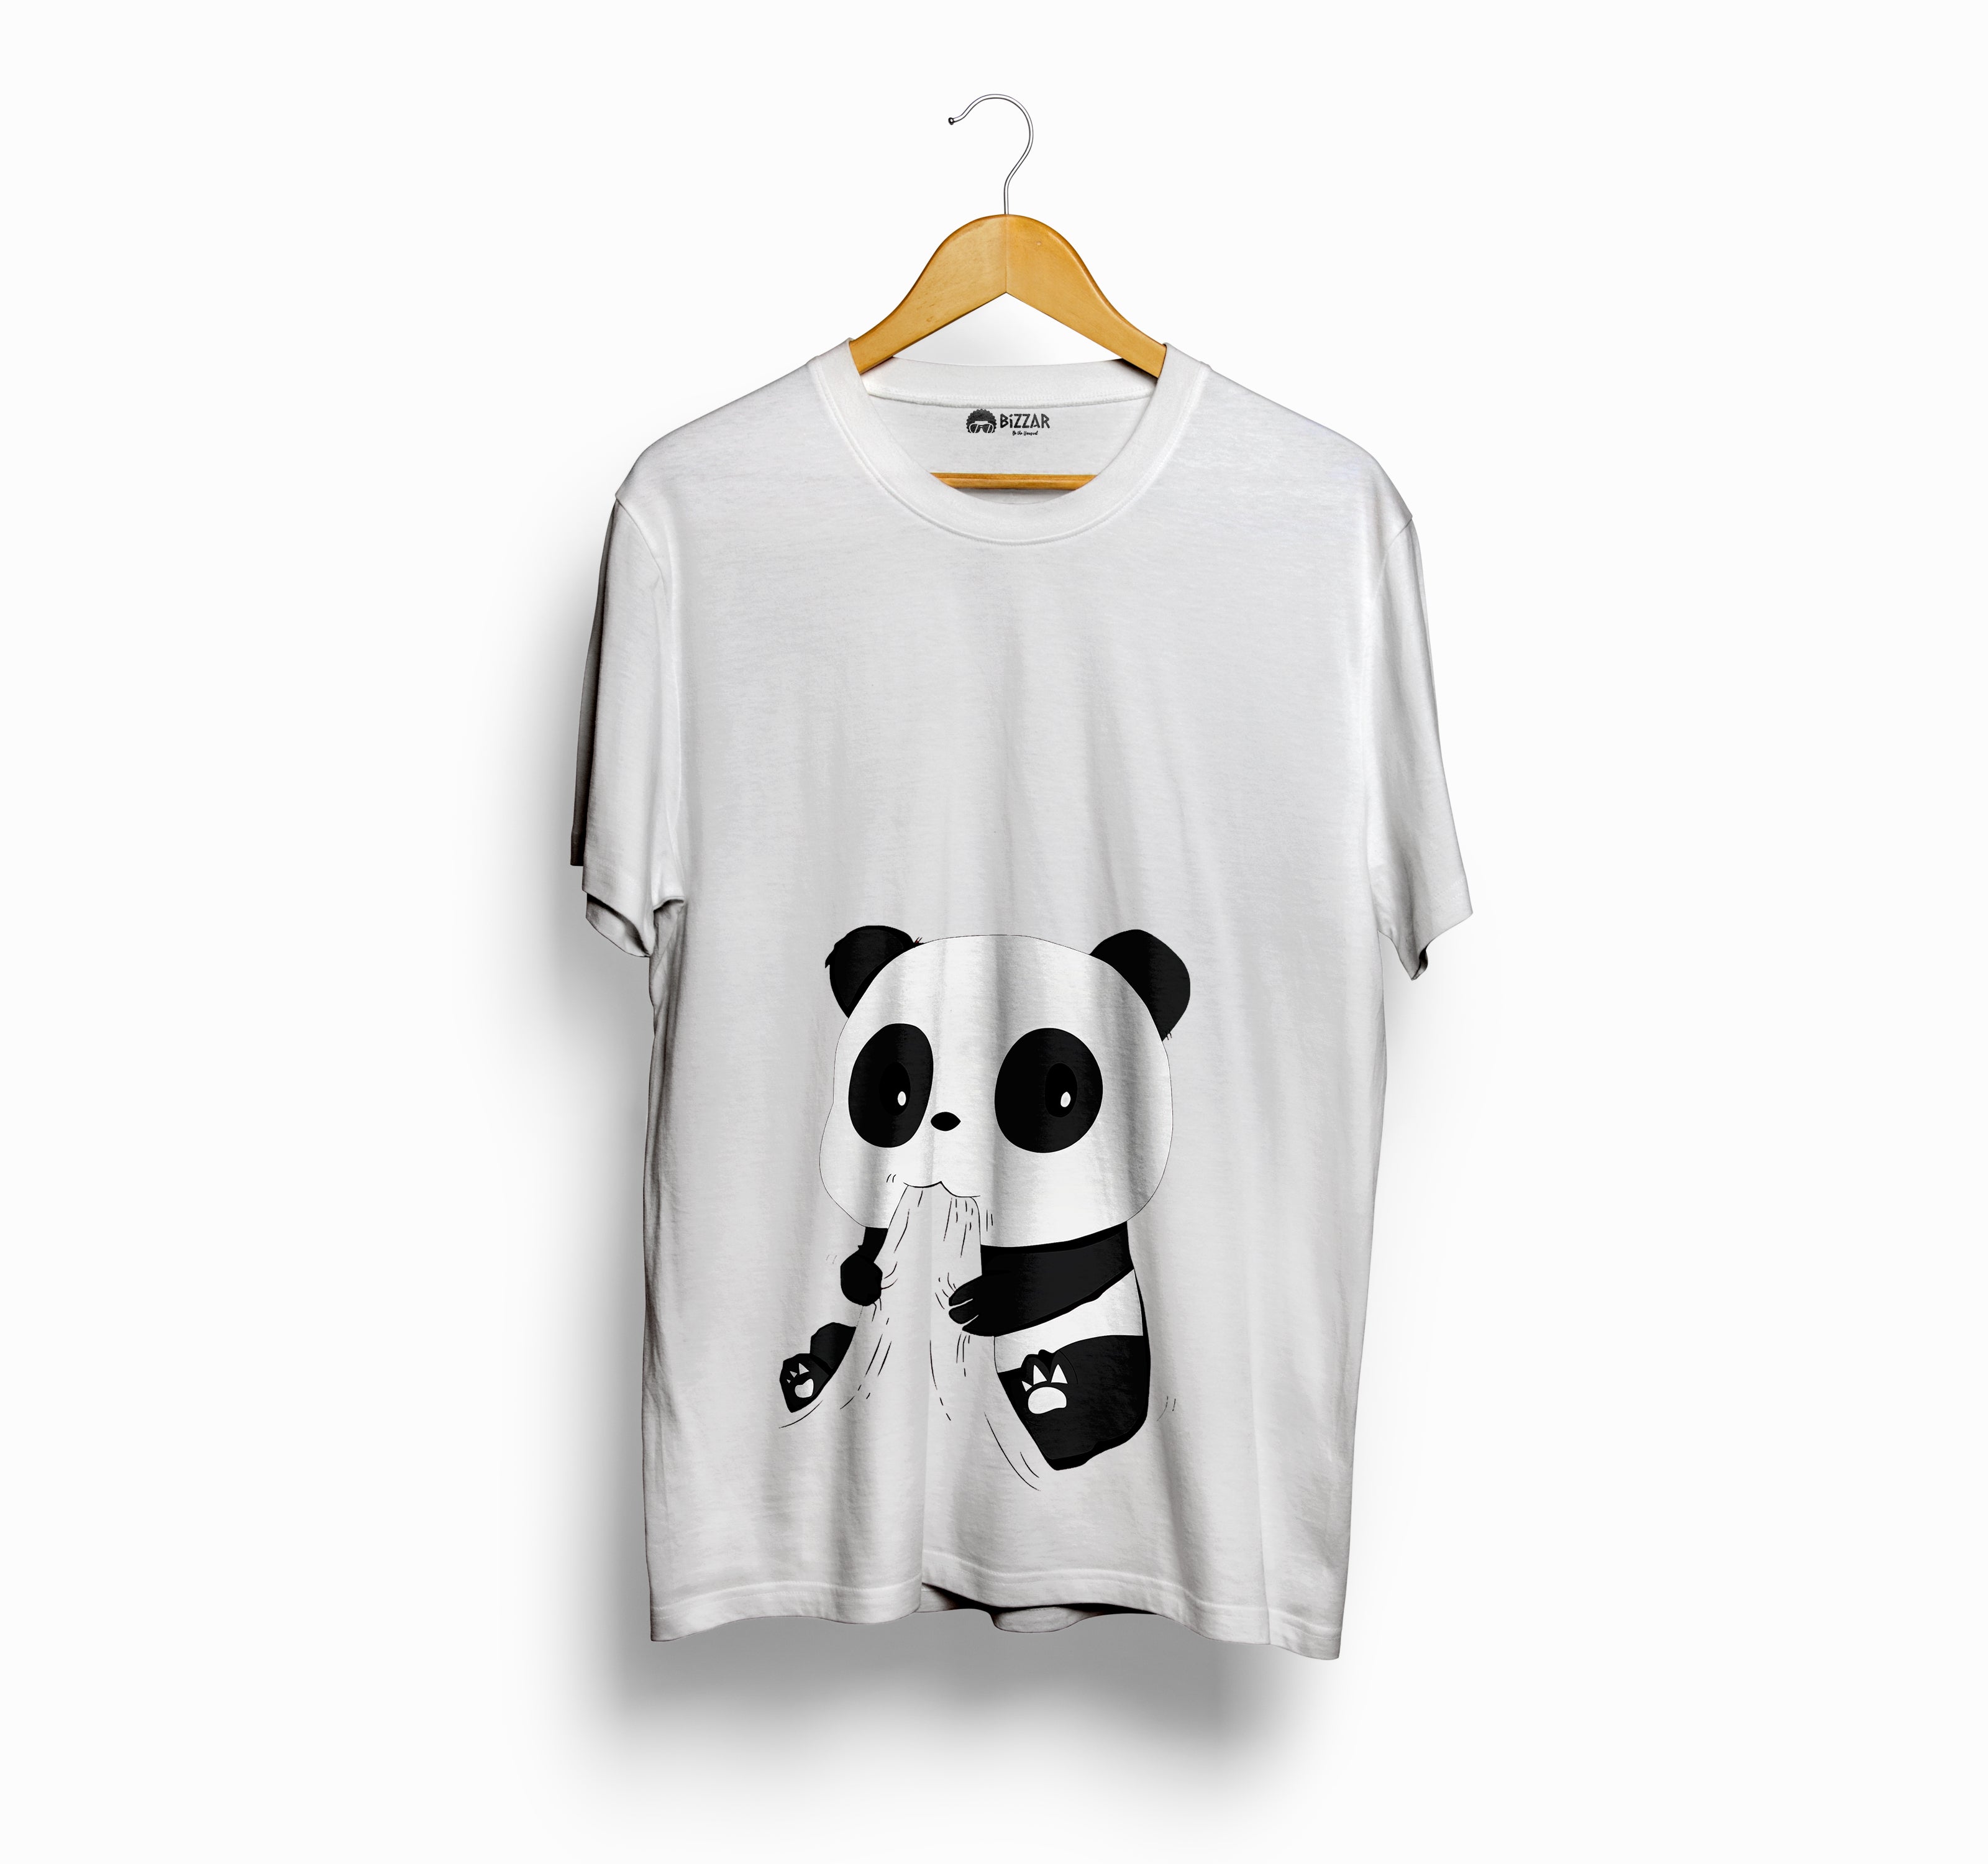 Bizzar's Hungry Panda White T-Shirt